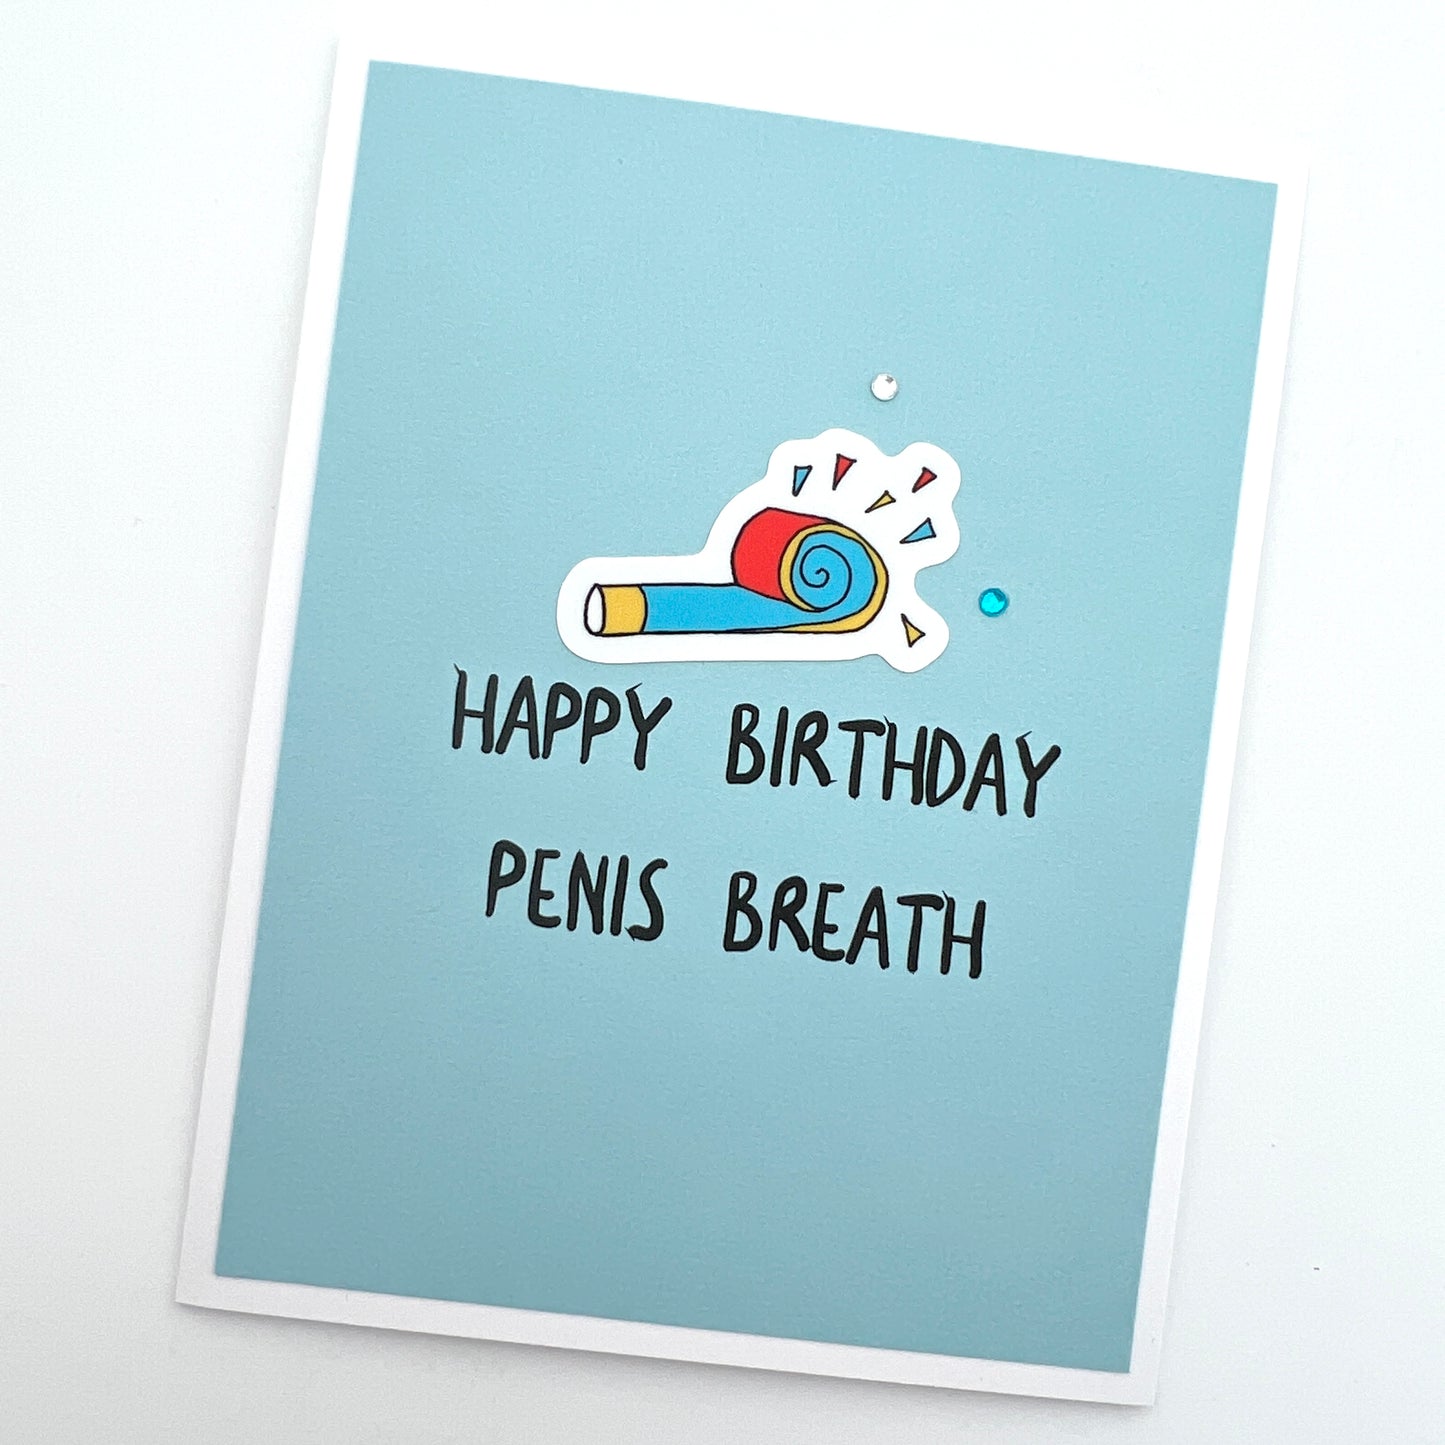 Penis Breath card